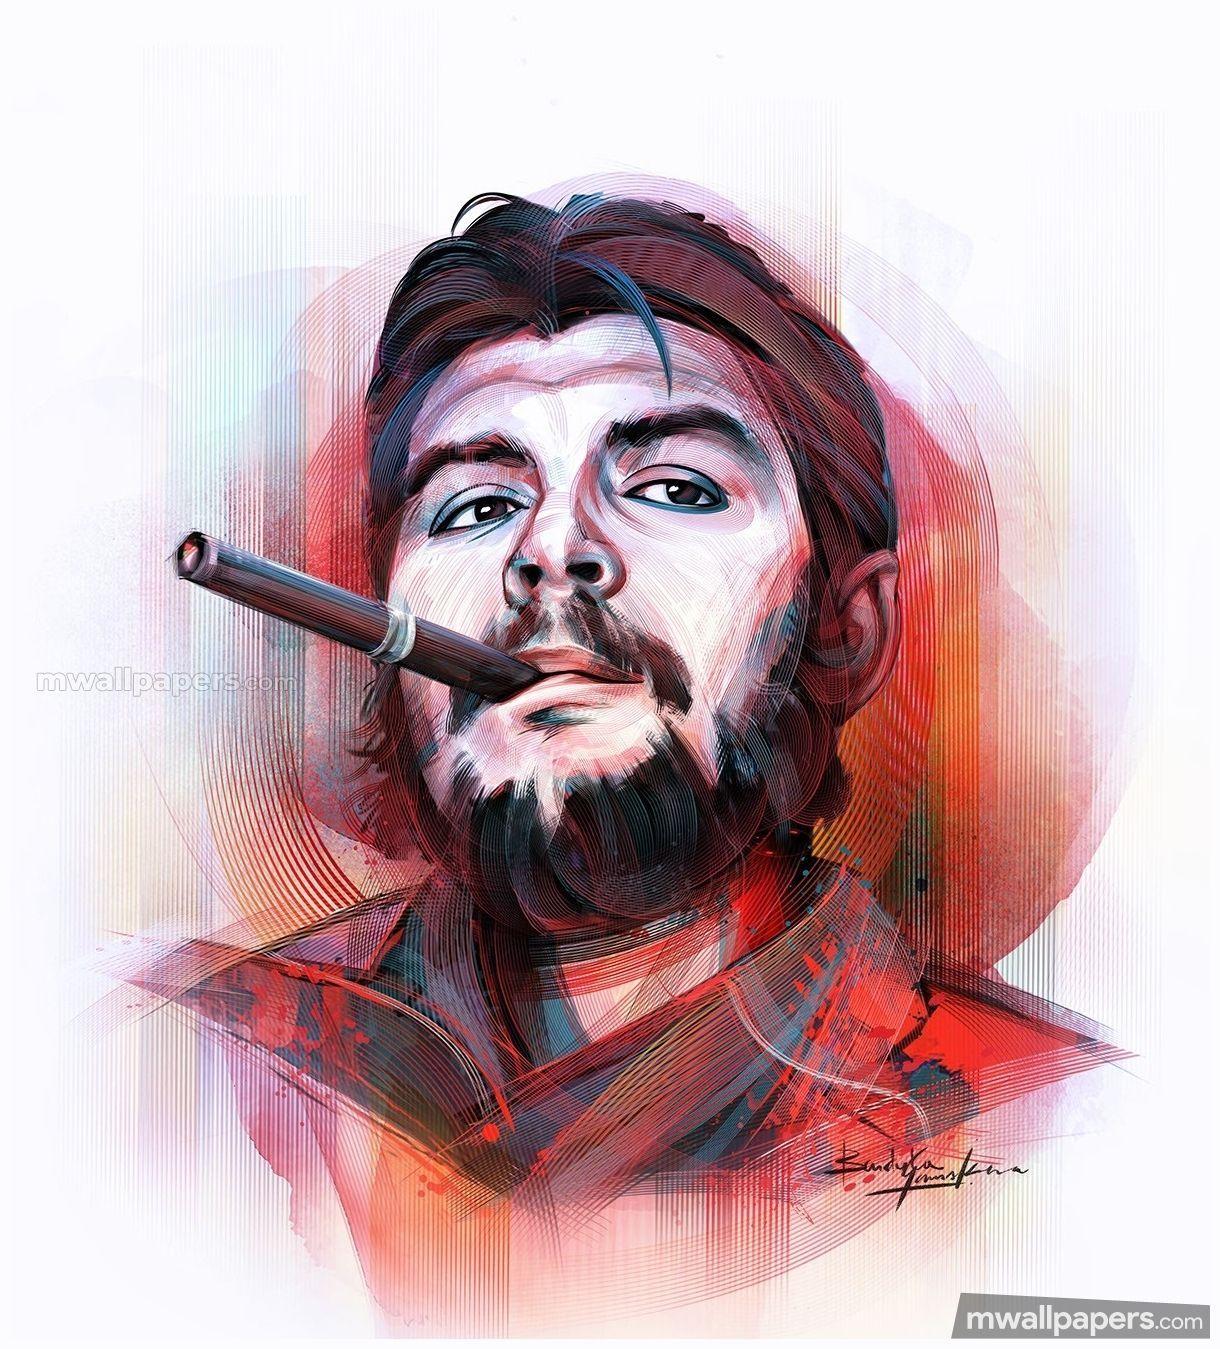 Che Guevara Wallpapers - Top Free Che Guevara Backgrounds - WallpaperAccess